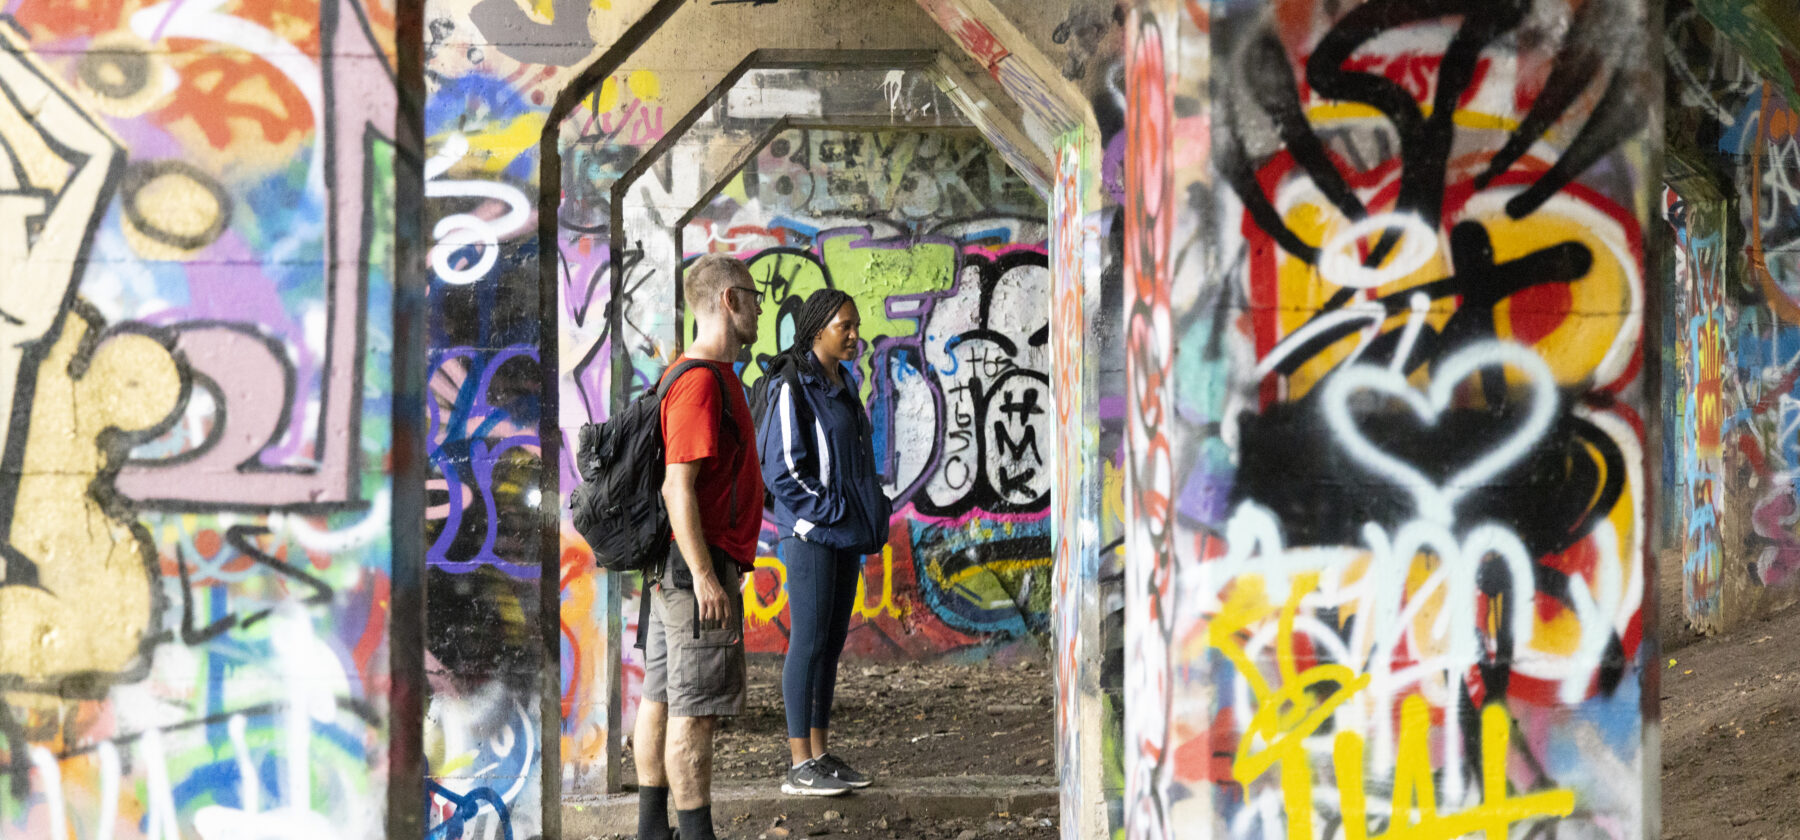 Two people stand among heavily graffitied underpass pillars in Philadelphia's Graffiti Pier